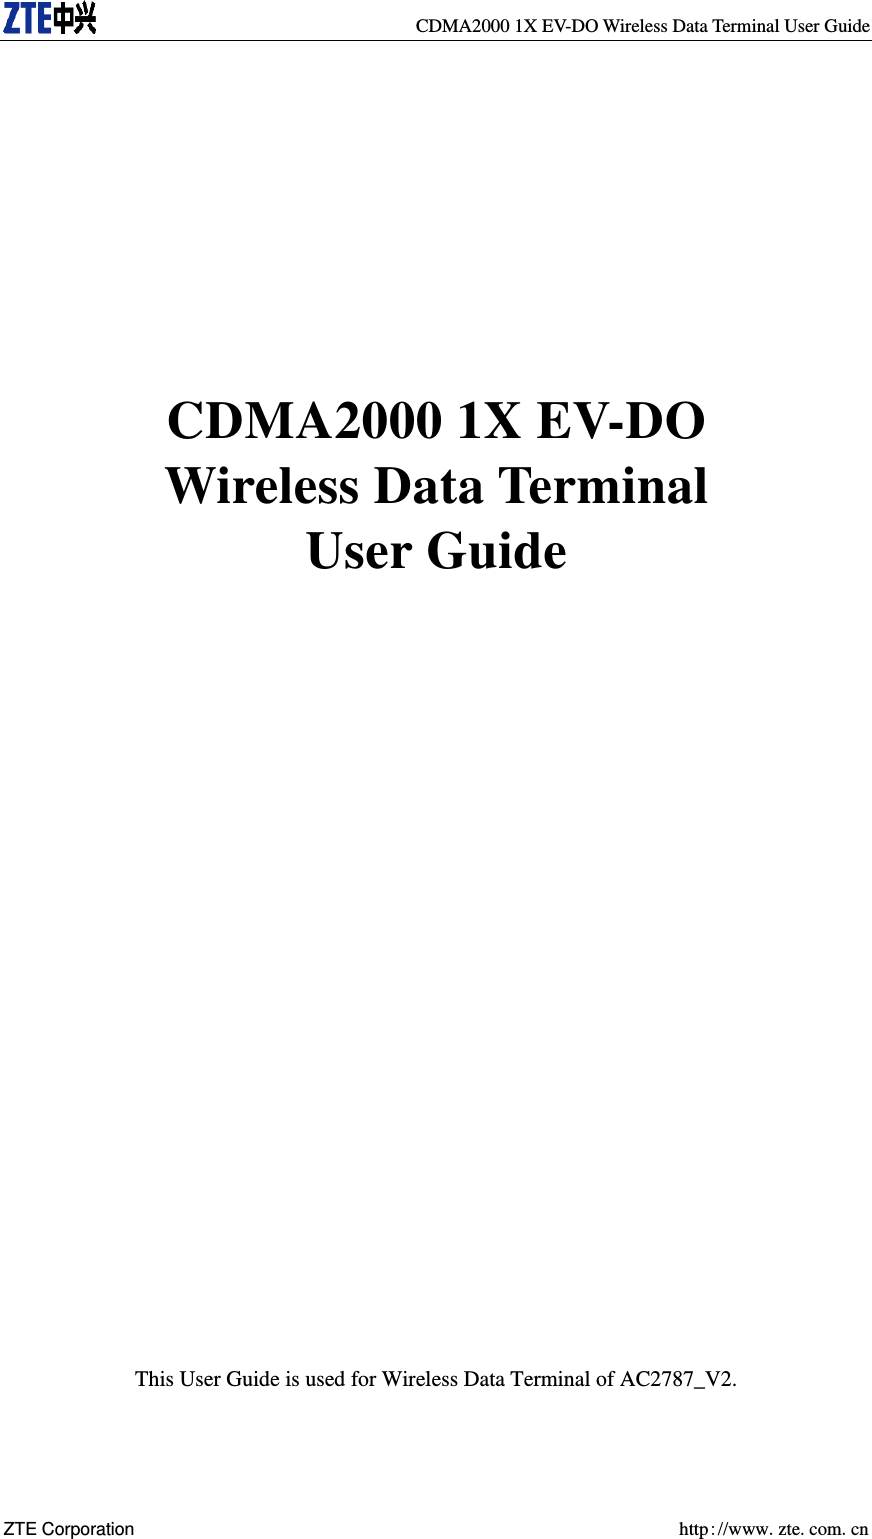   CDMA2000 1X EV-DO Wireless Data Terminal User Guide ZTE Corporation    http://www.zte.com.cn        CDMA2000 1X EV-DO Wireless Data Terminal User Guide                         This User Guide is used for Wireless Data Terminal of AC2787_V2. 